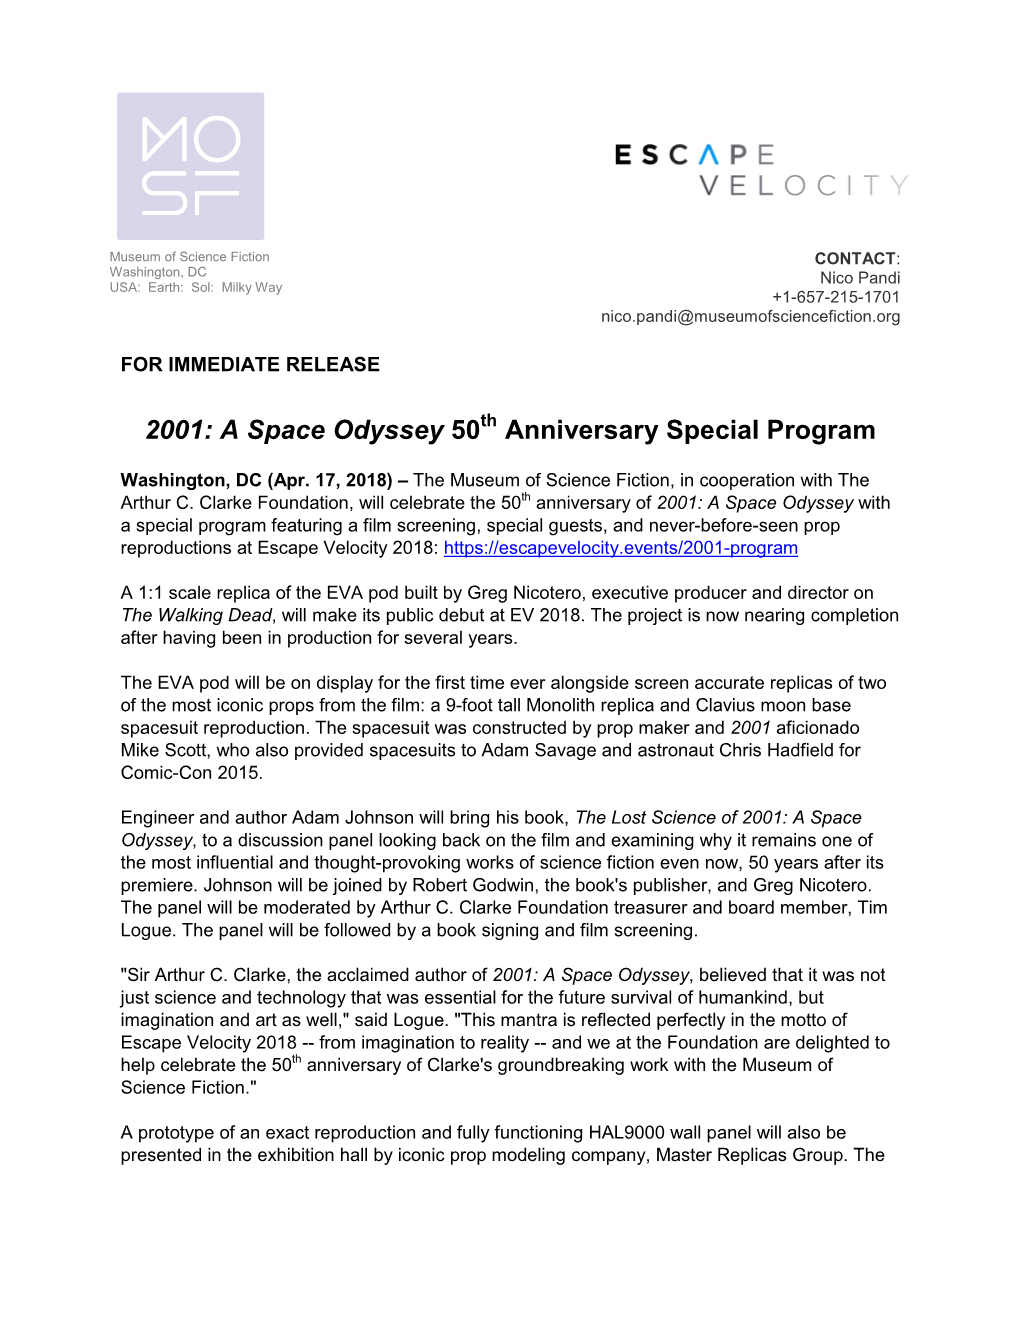 2001: a Space Odyssey 50 Anniversary Special Program